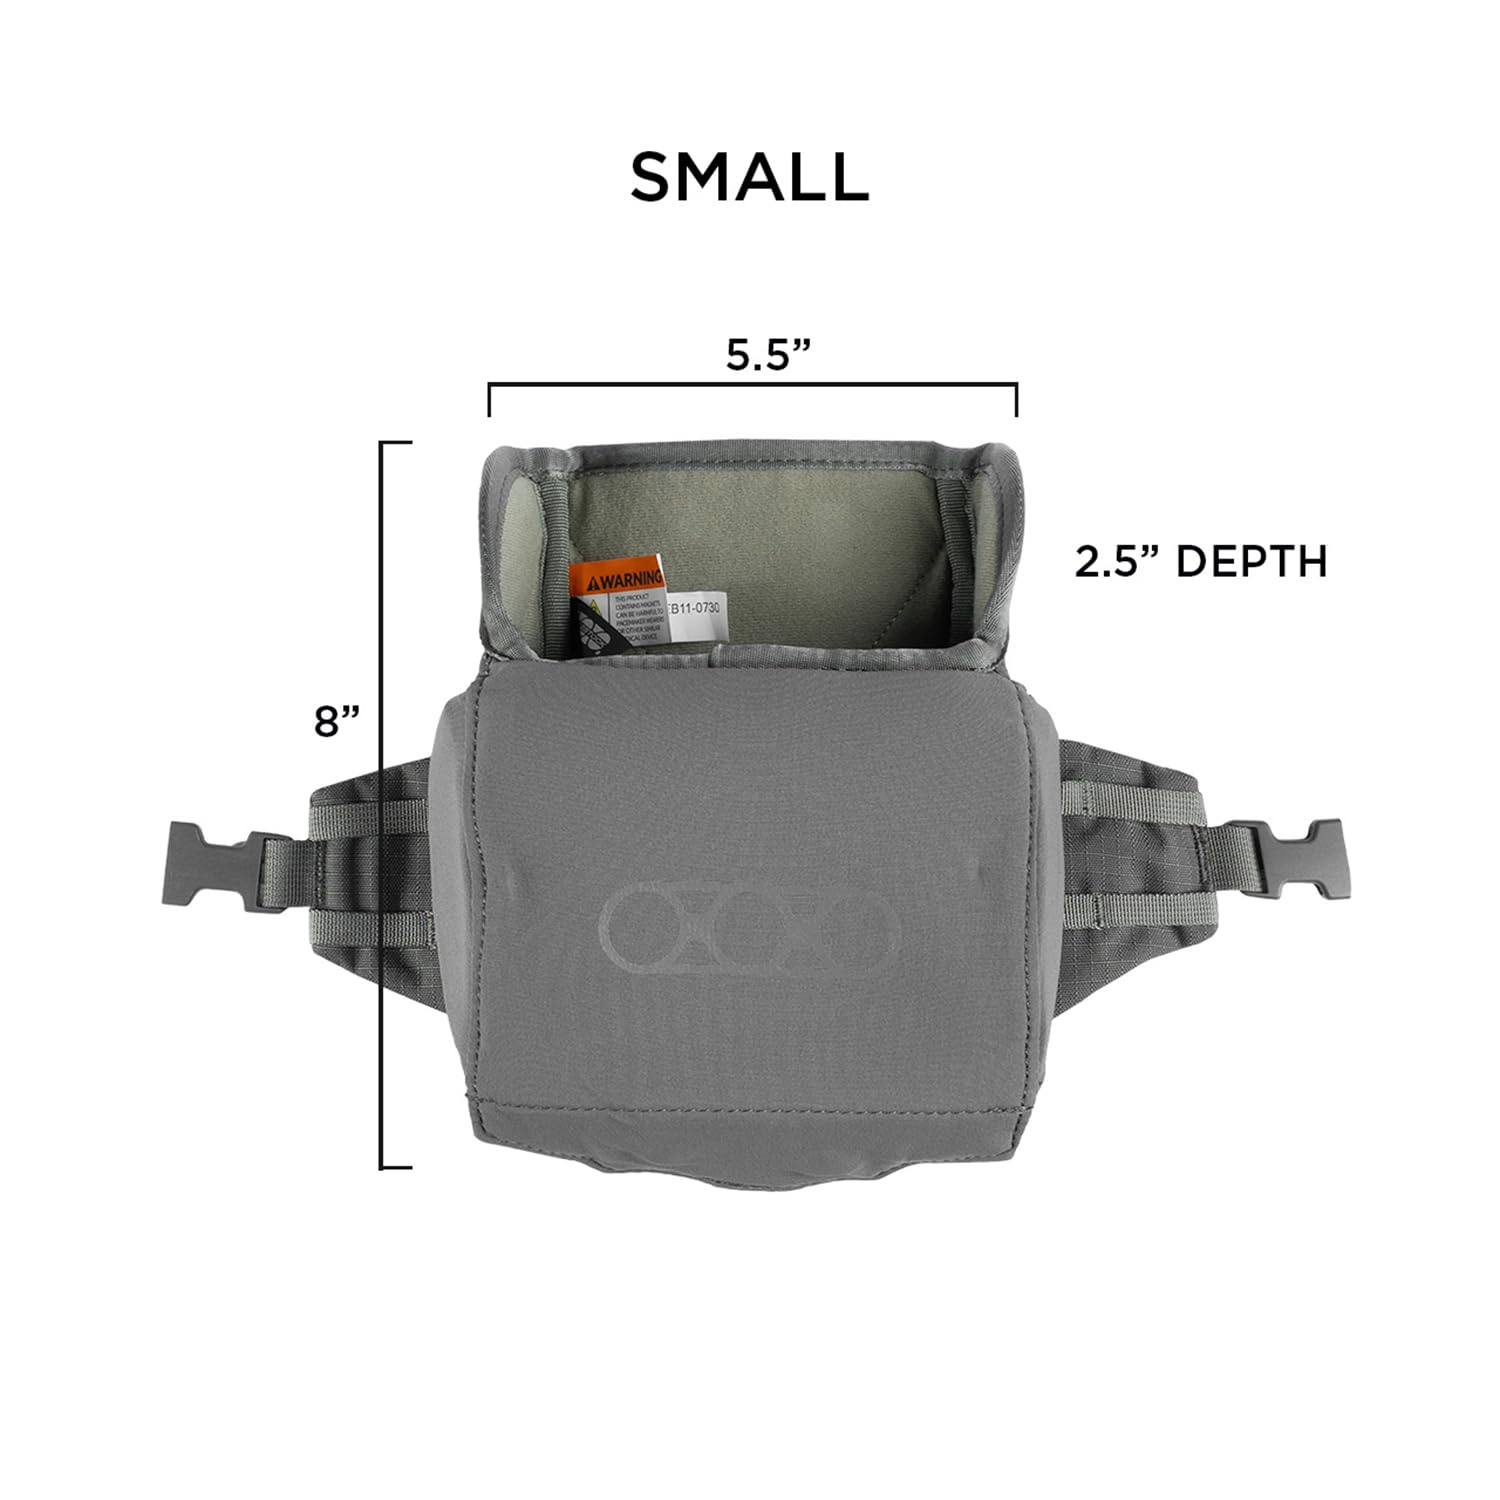 Eberlestock Recon Modular Bino Pack - Advanced Binocular Harness System with Customizable Attachments - Dry Earth - Small